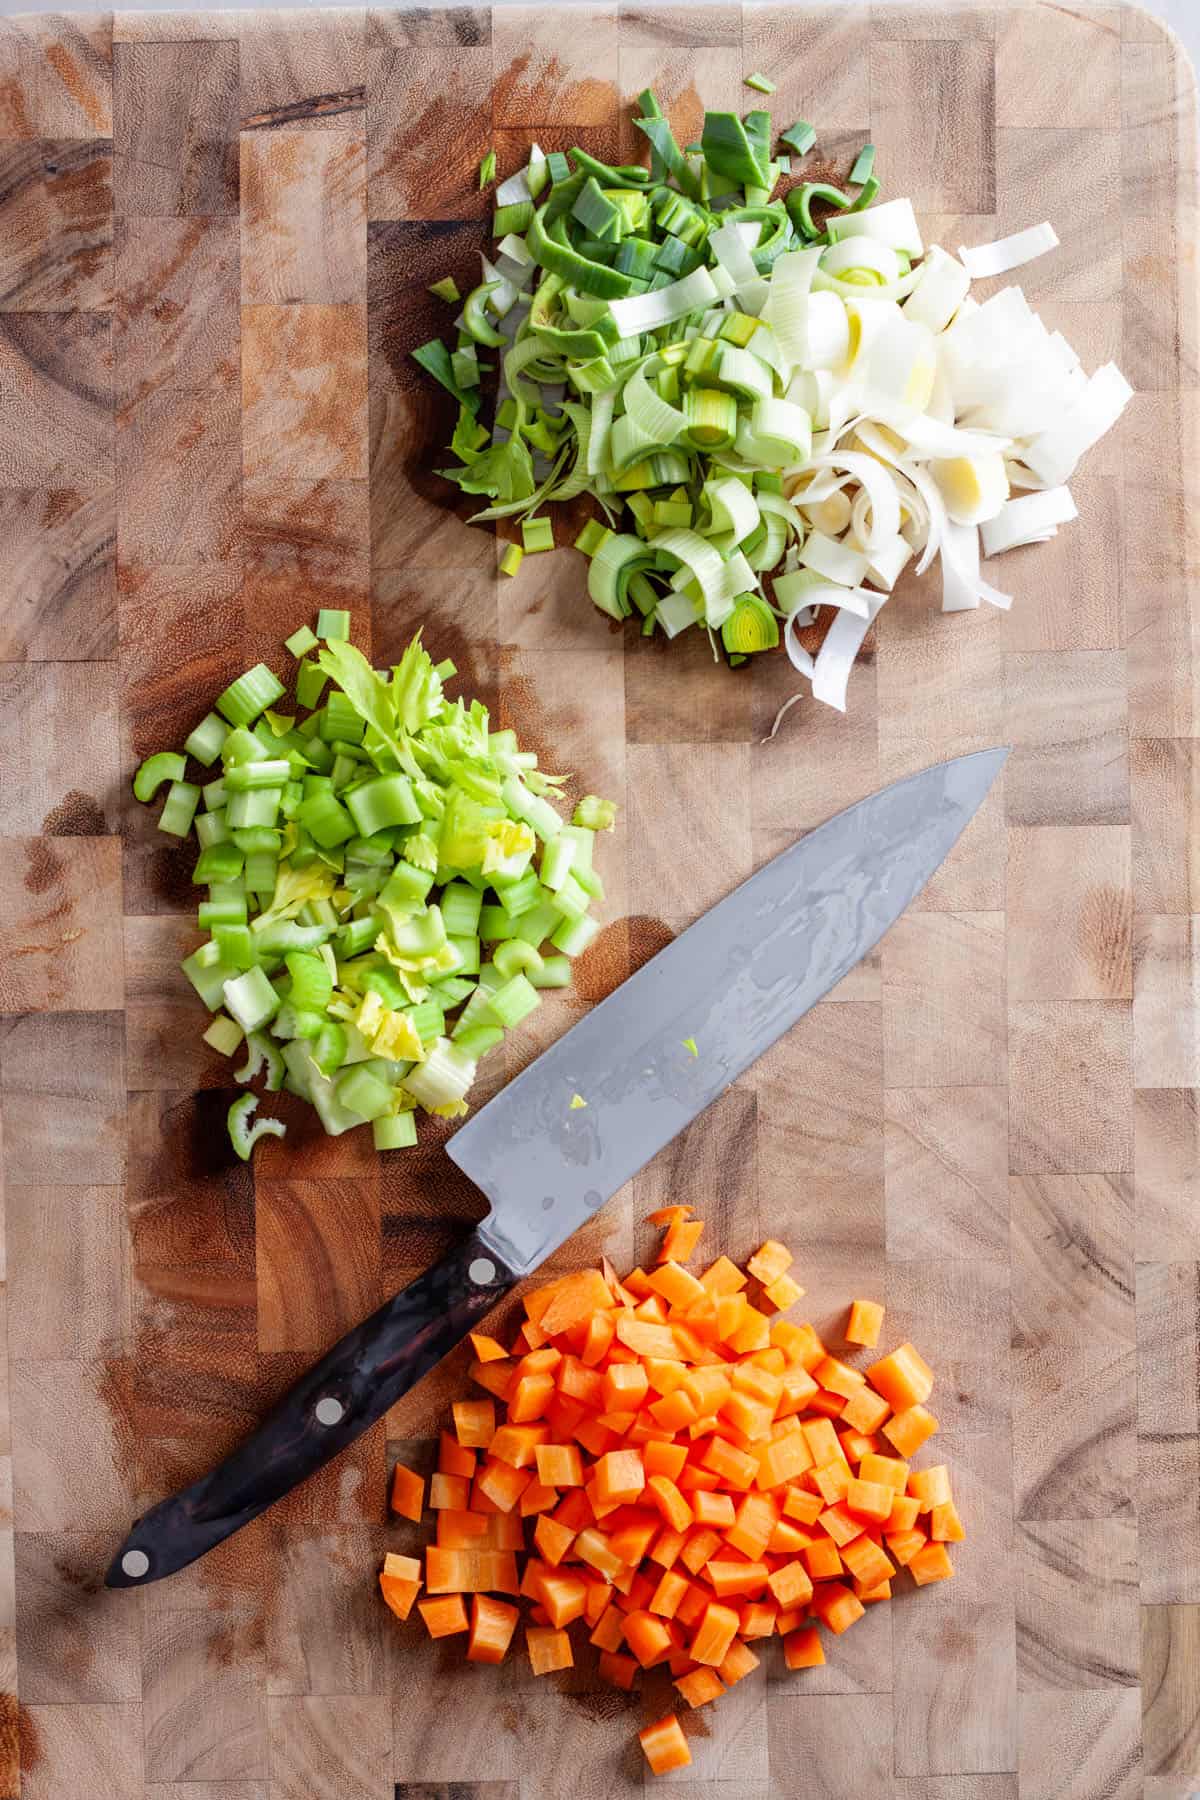 Celery, carrots and a leek chopped on a butcherblock cutting board.